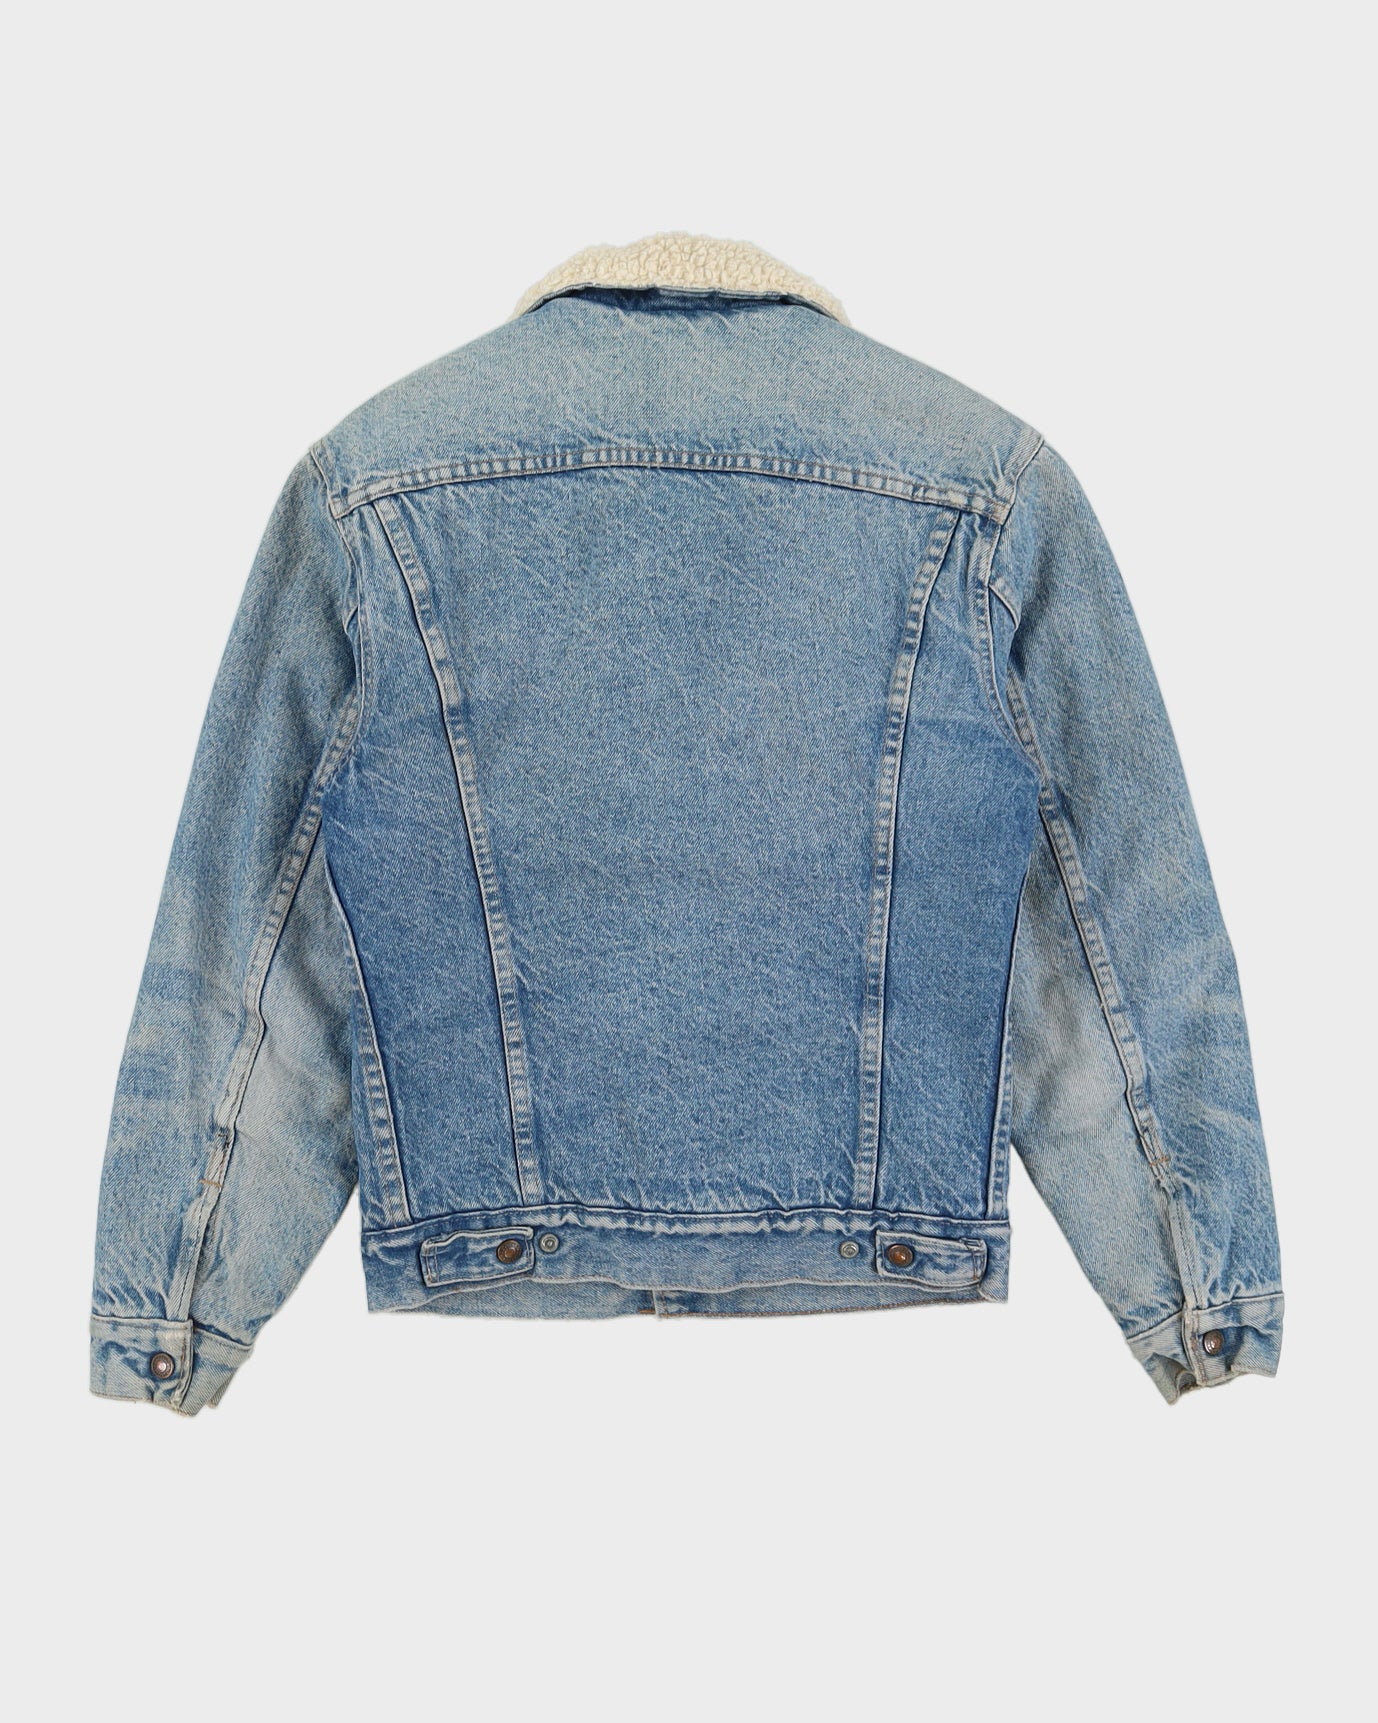 Vintage 80s Levis Denim Blue Fleeced Jacket  - S